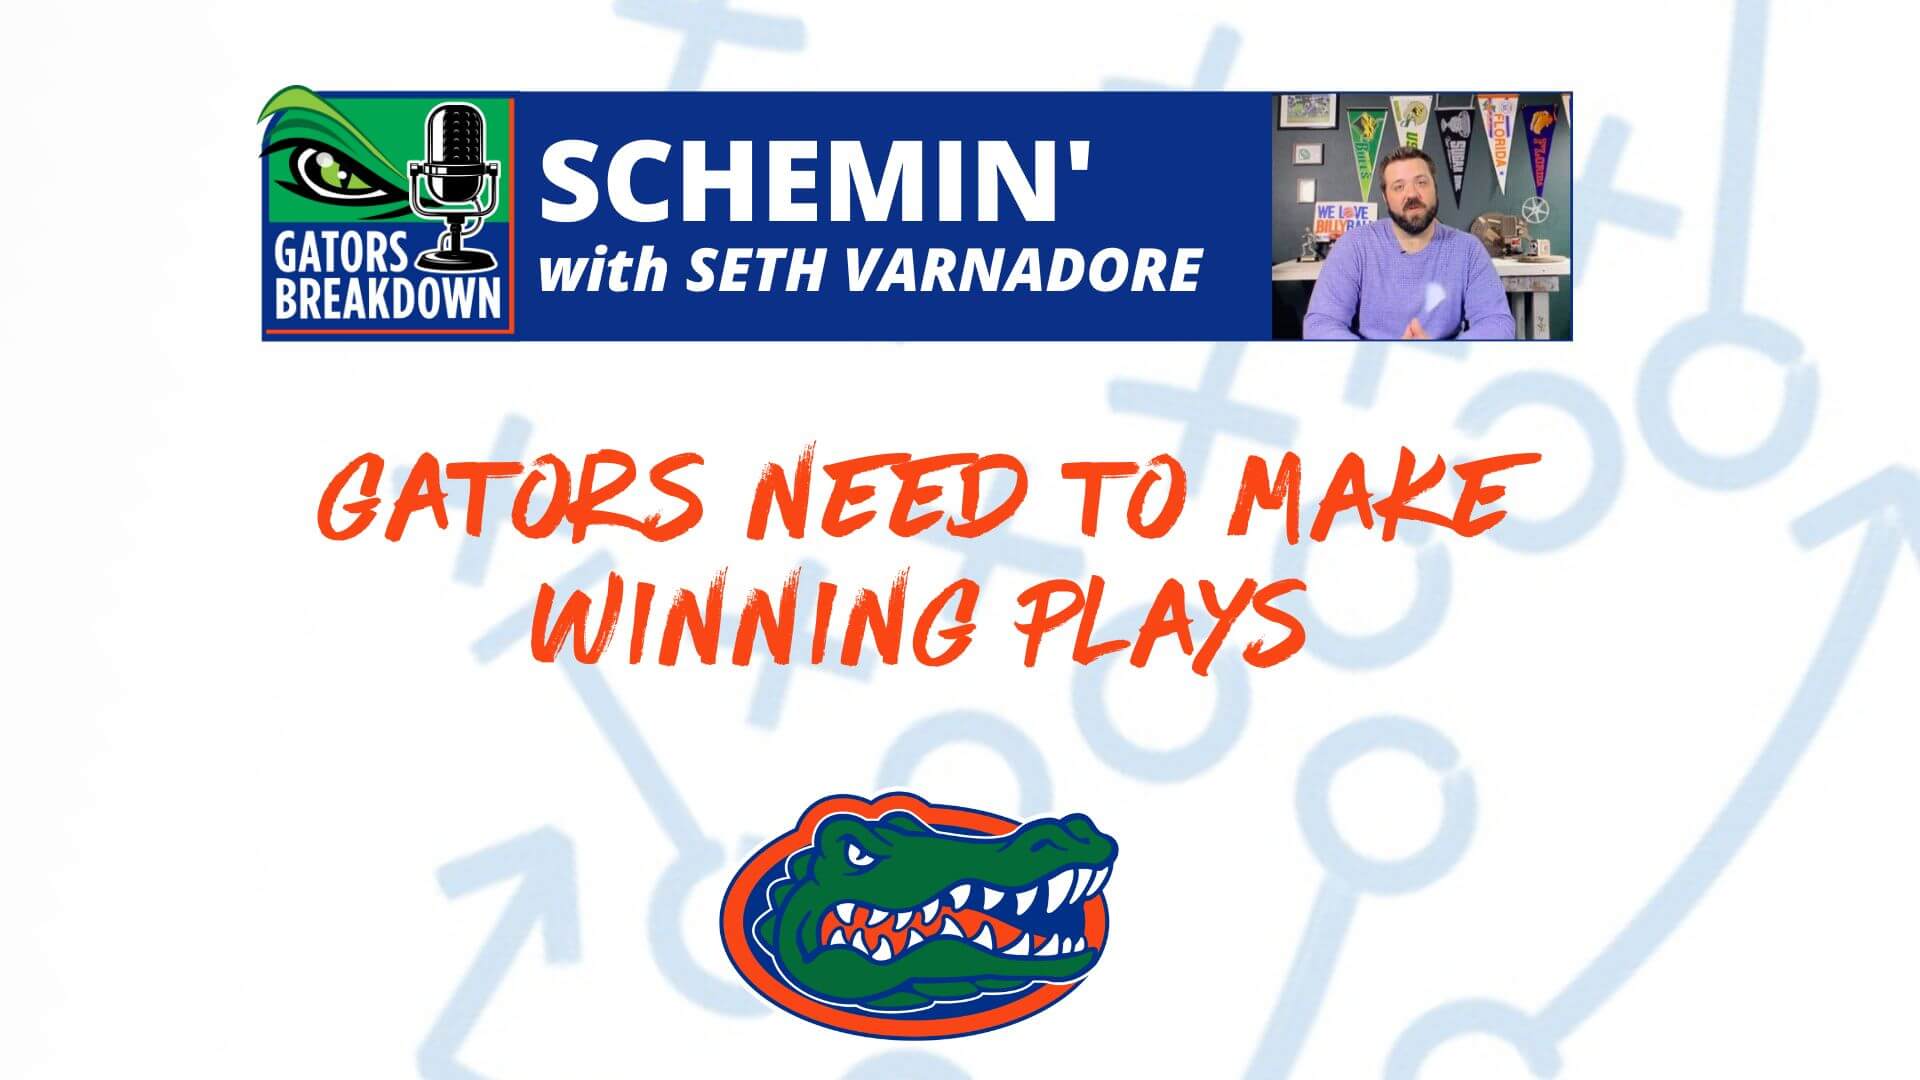 Gators need to make winning plays